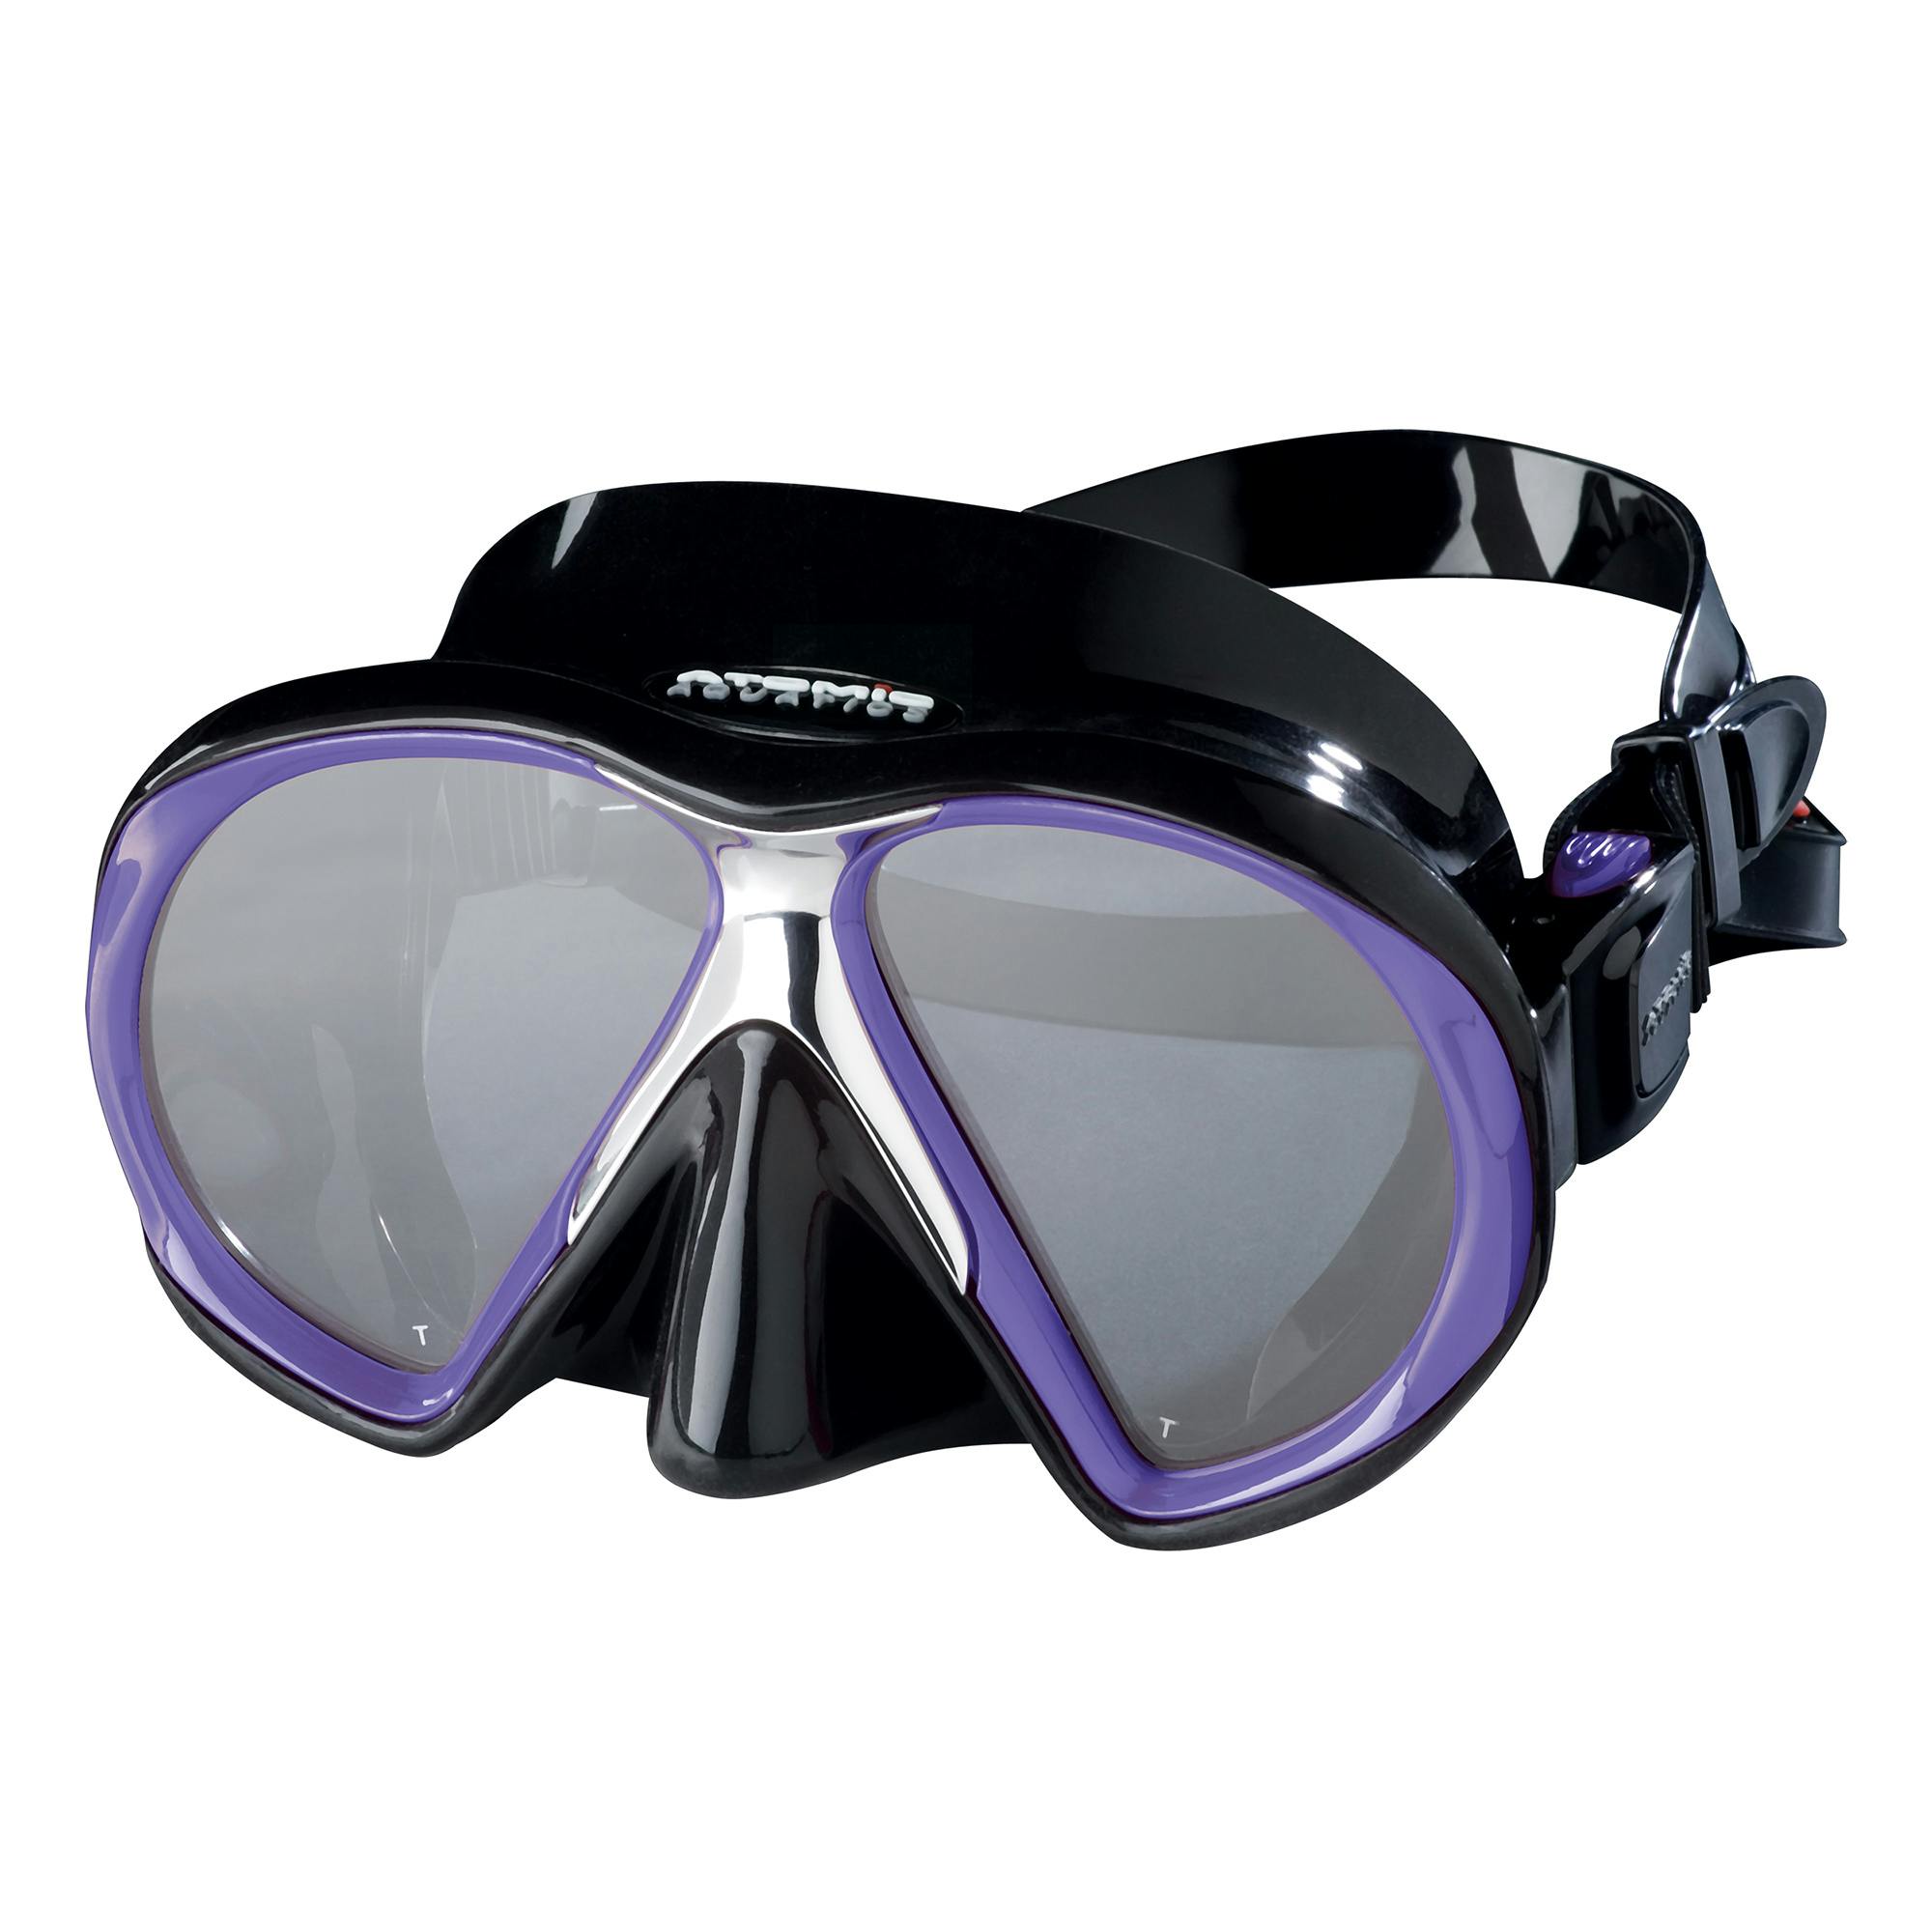 Atomic SubFrame Mask, Two Lens (Medium Fit) - Black/Purple